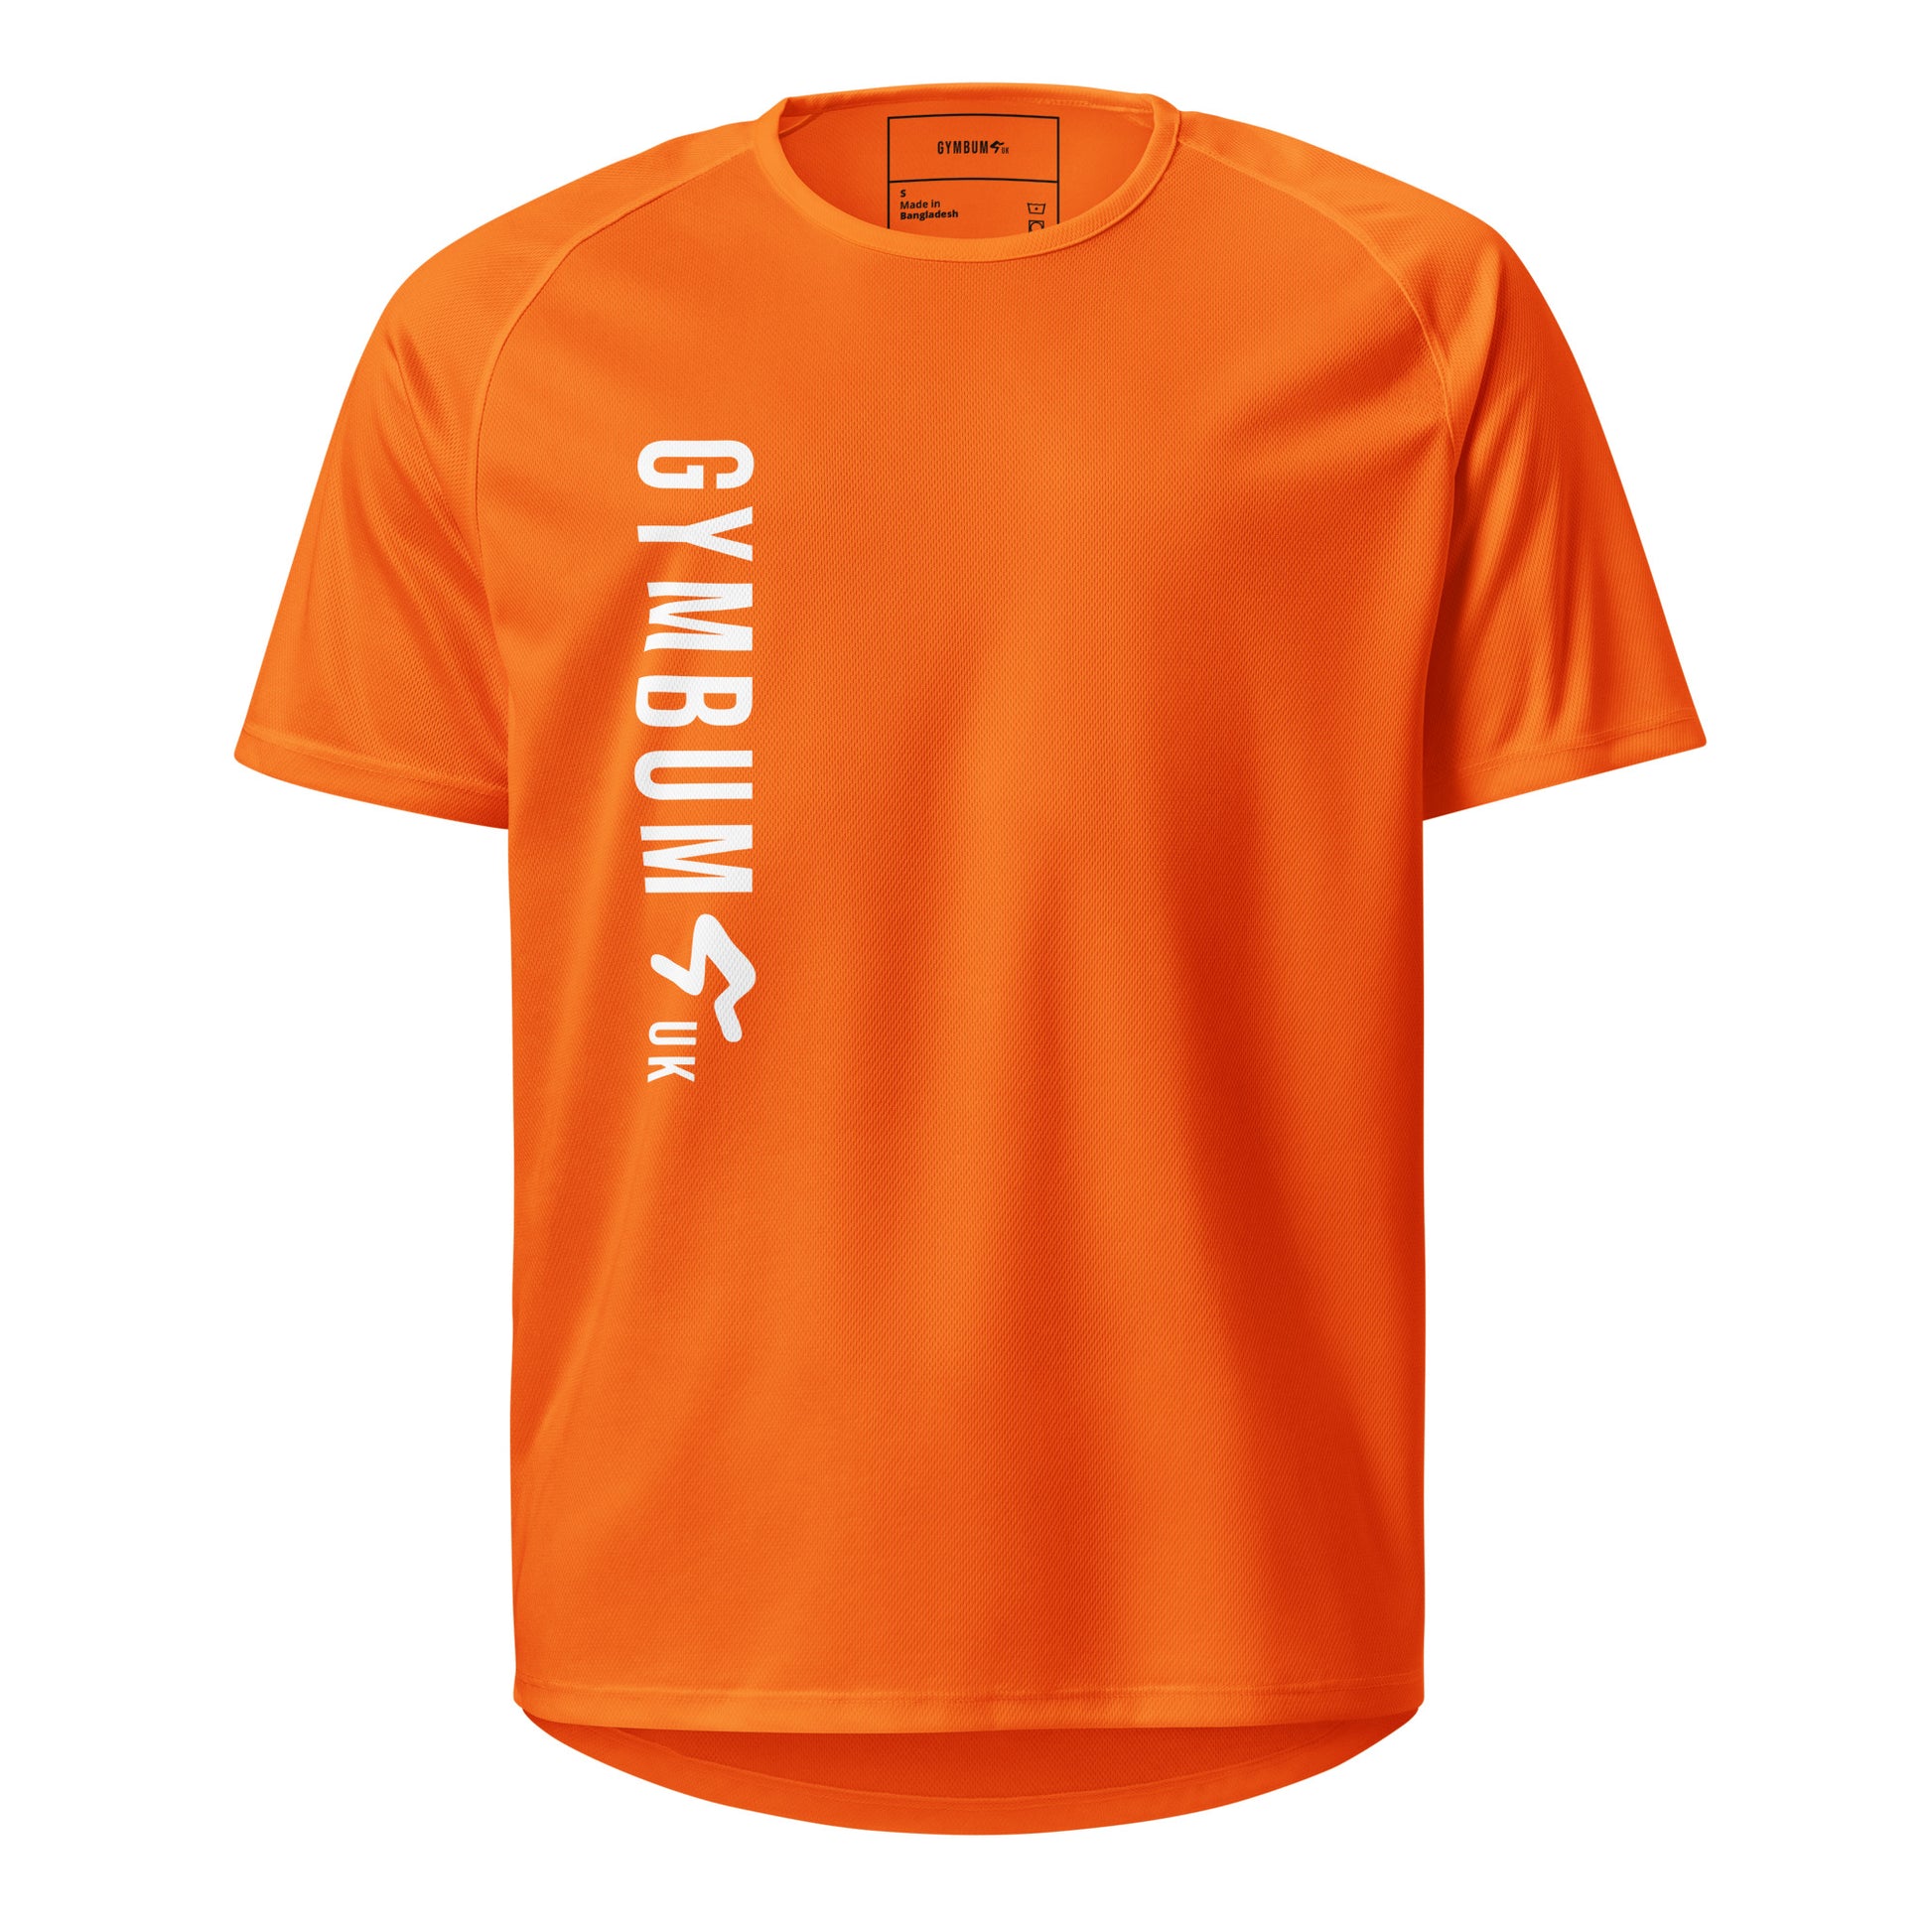 The GymbumUK Long Logo Flex QuickDry Performance T-Shirt